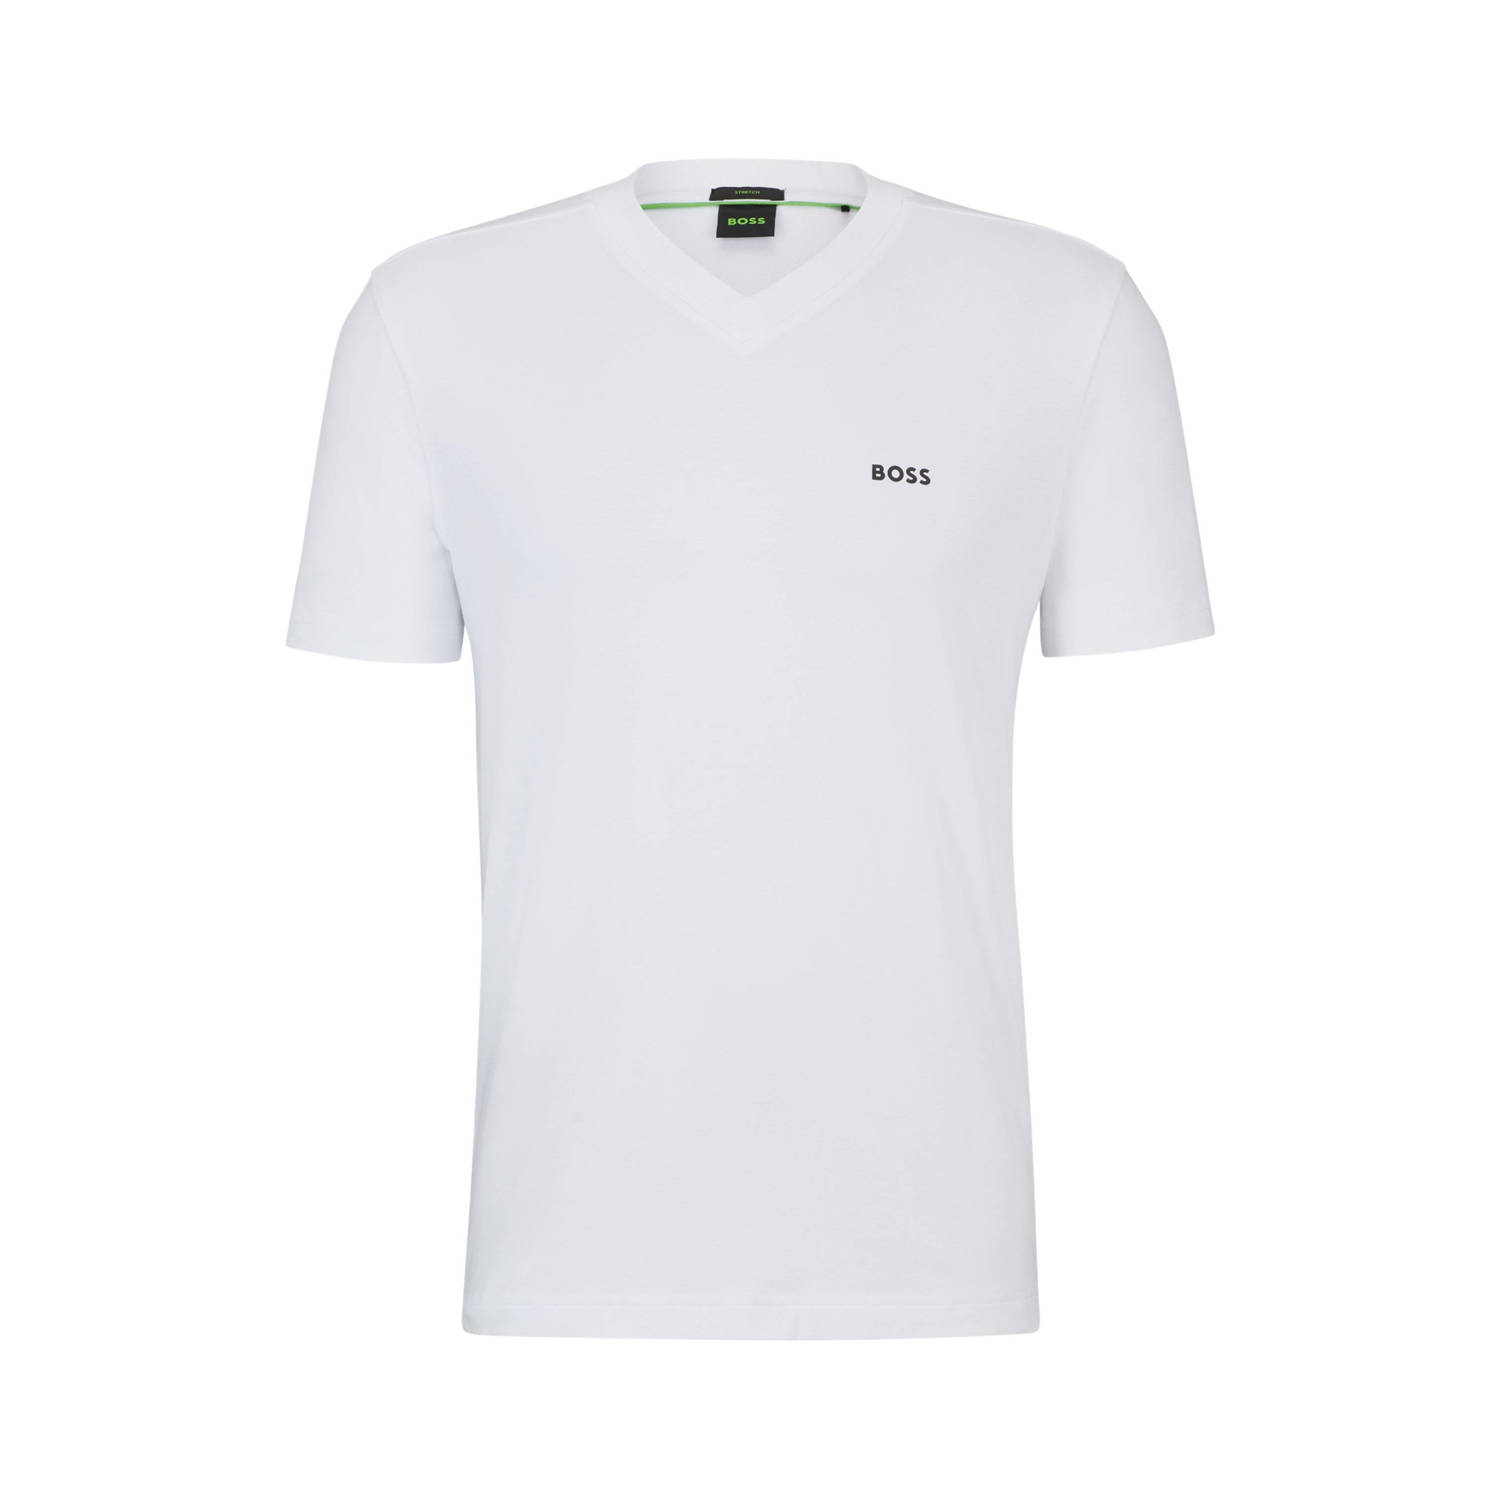 BOSS T-shirt met logo wit